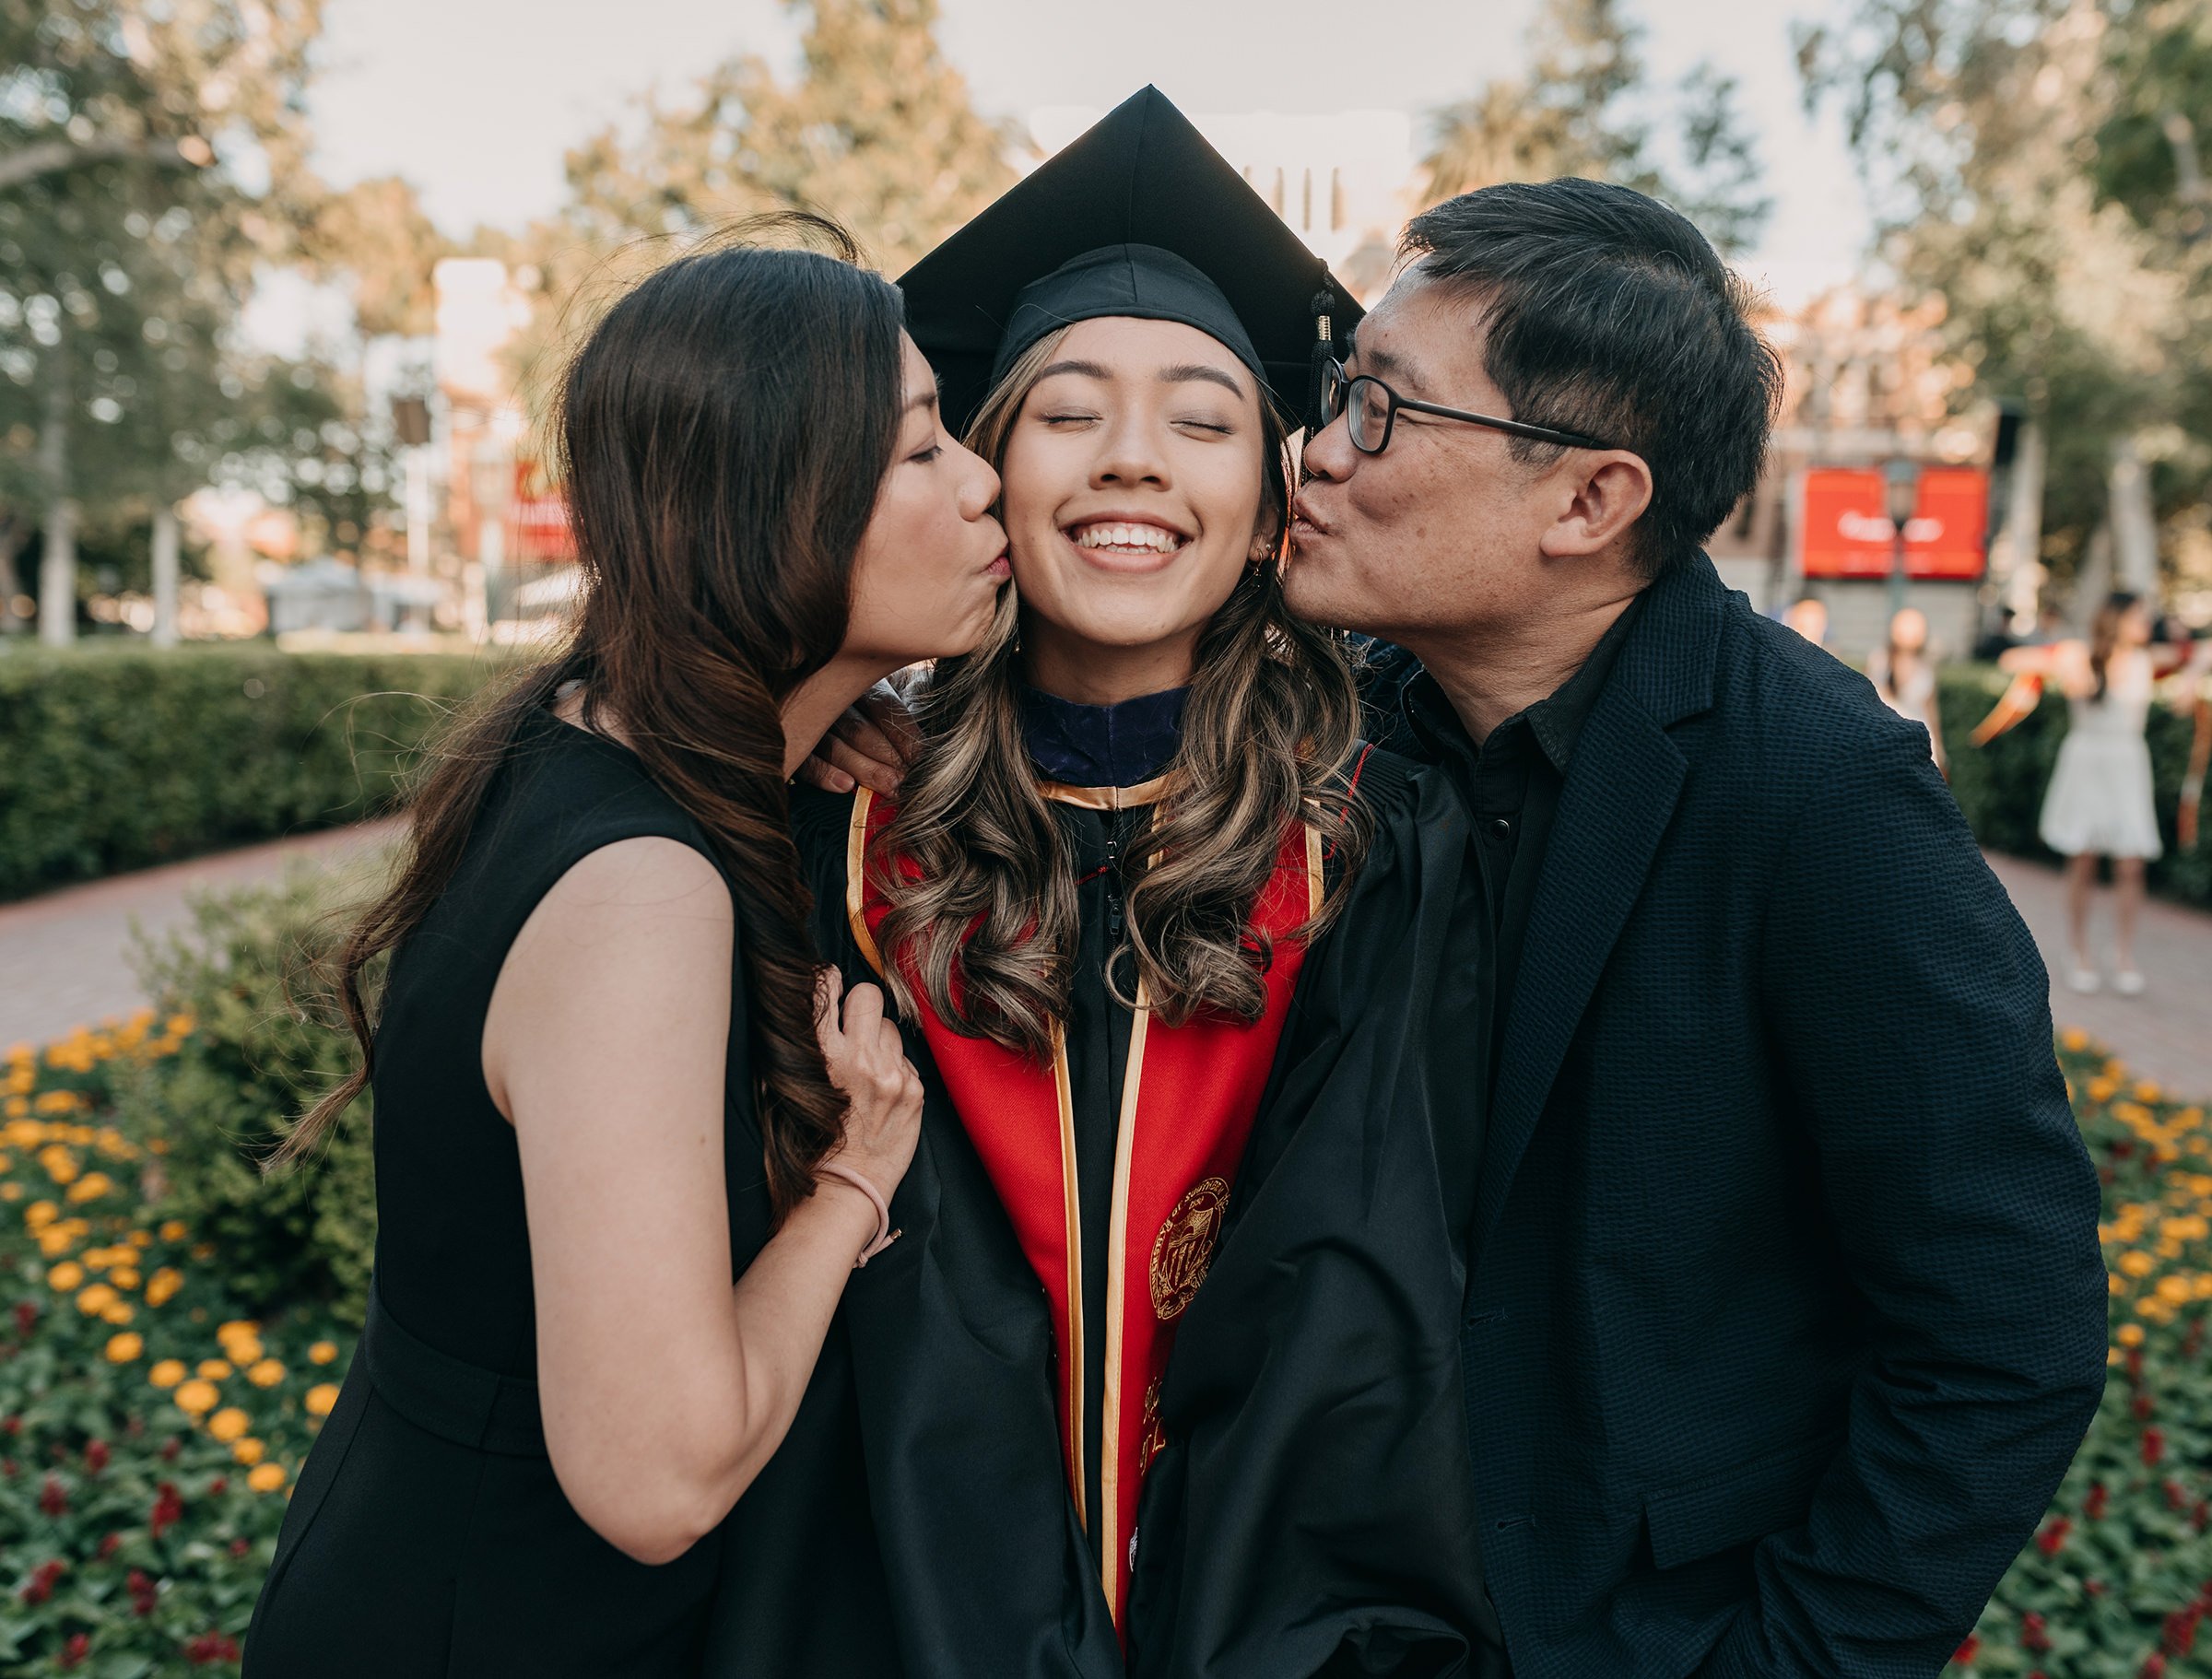 usc-graduation-family-portrait-losangeles-california-photographer-14.jpg